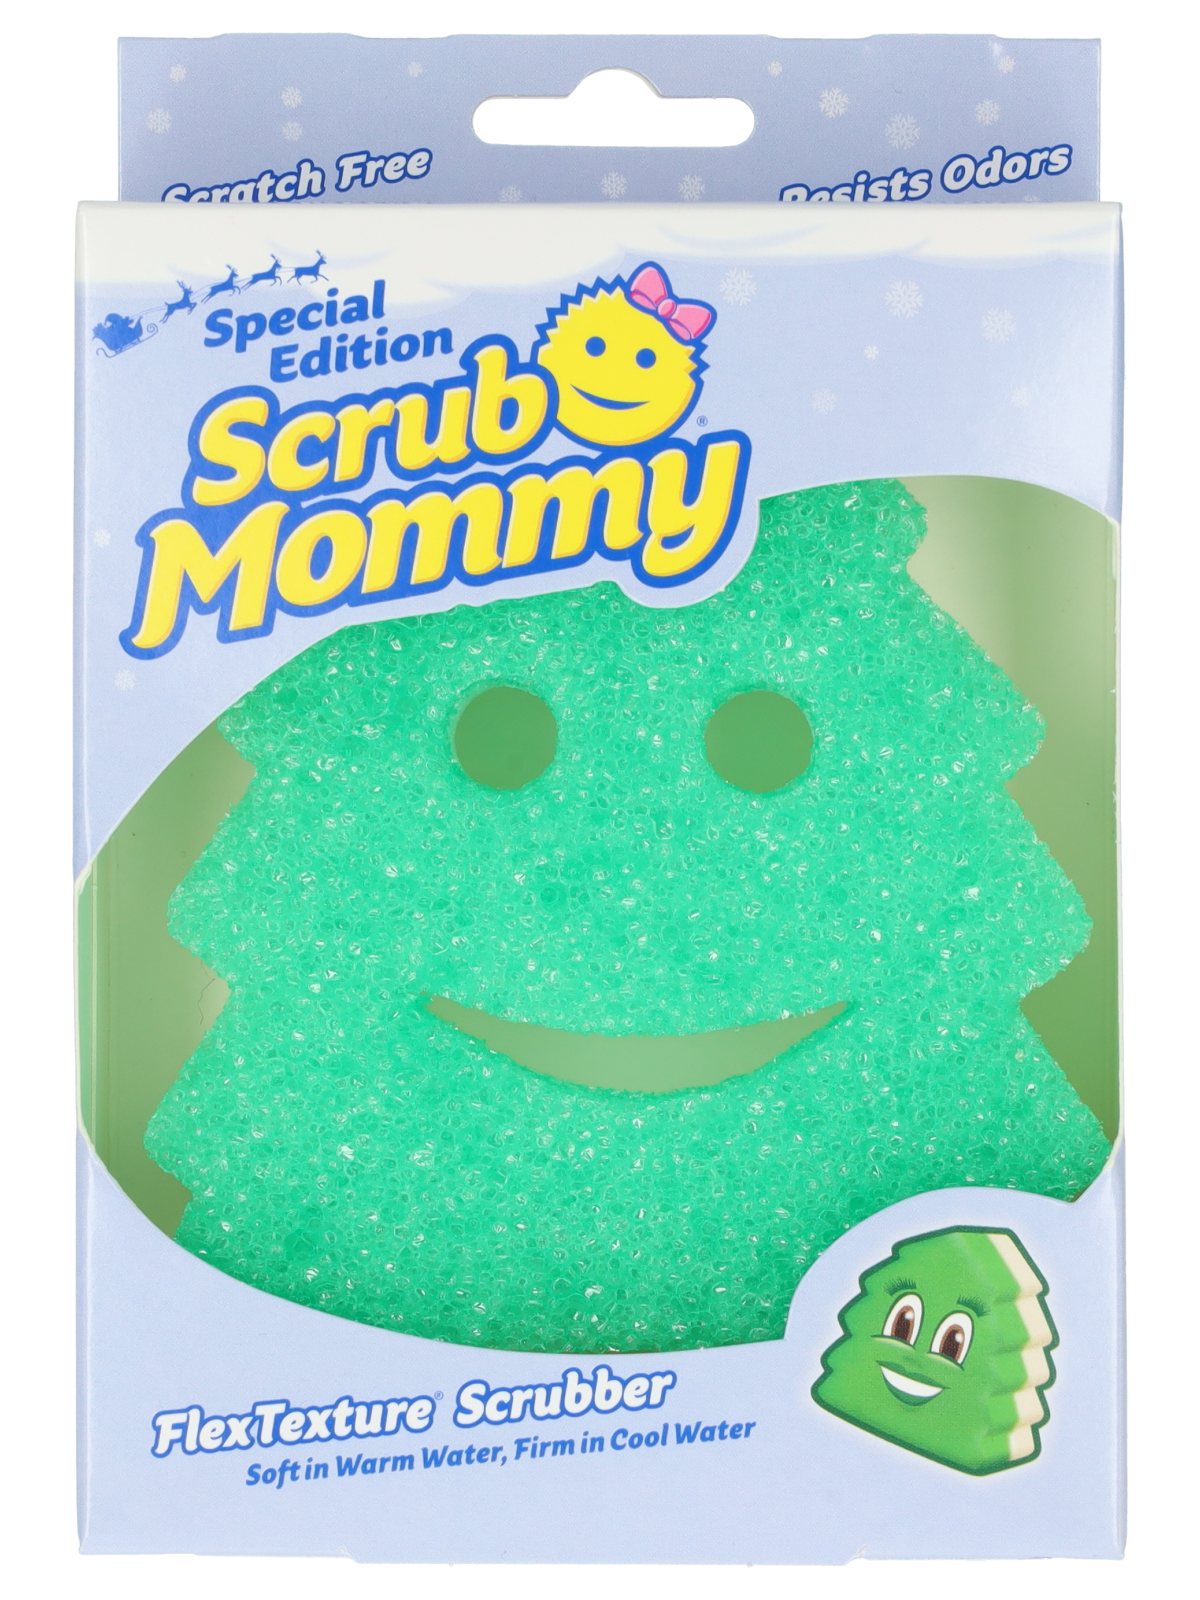 Eponge scrub Mommy essentials CIF prix pas cher